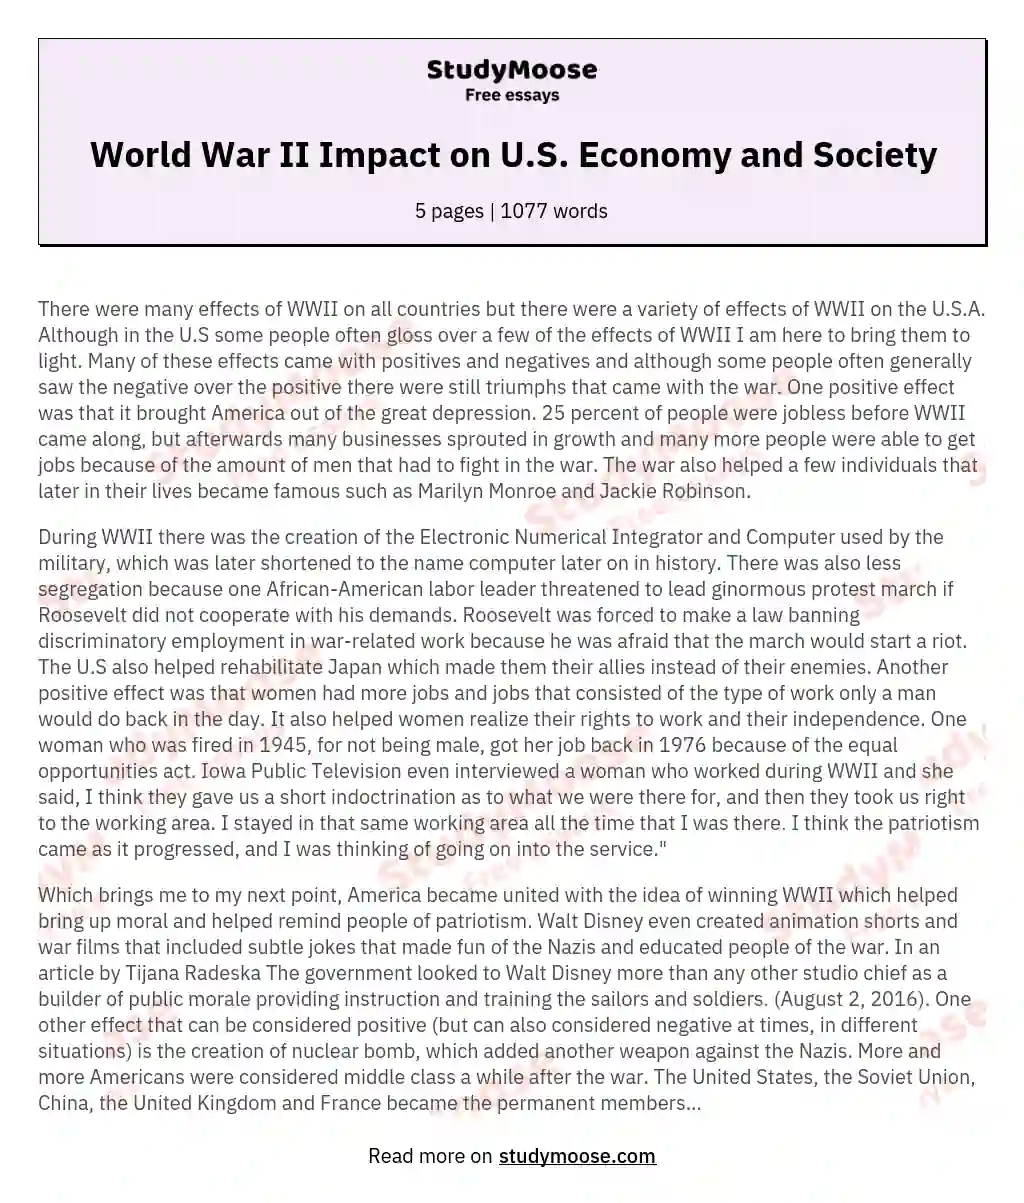 World War II Impact on U.S. Economy and Society essay